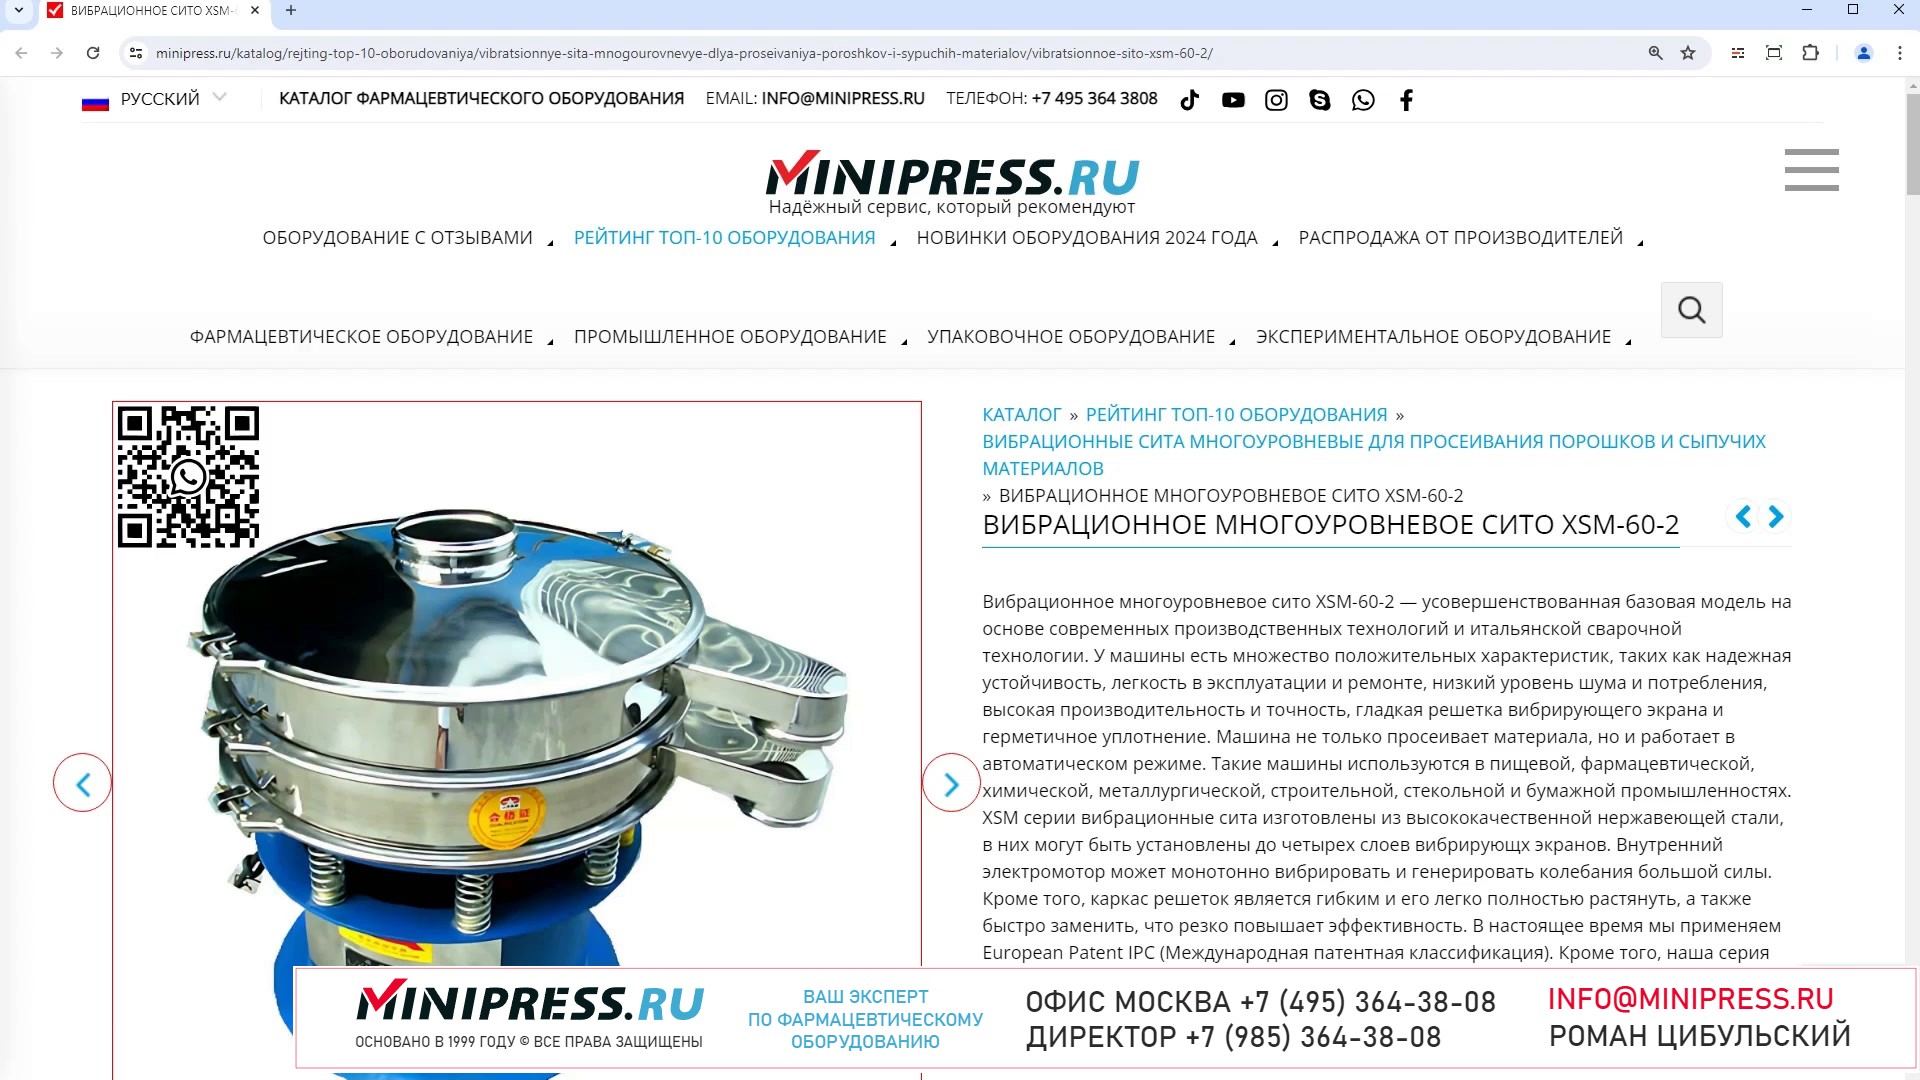 Minipress.ru Вибрационное многоуровневое сито XSM-60-2